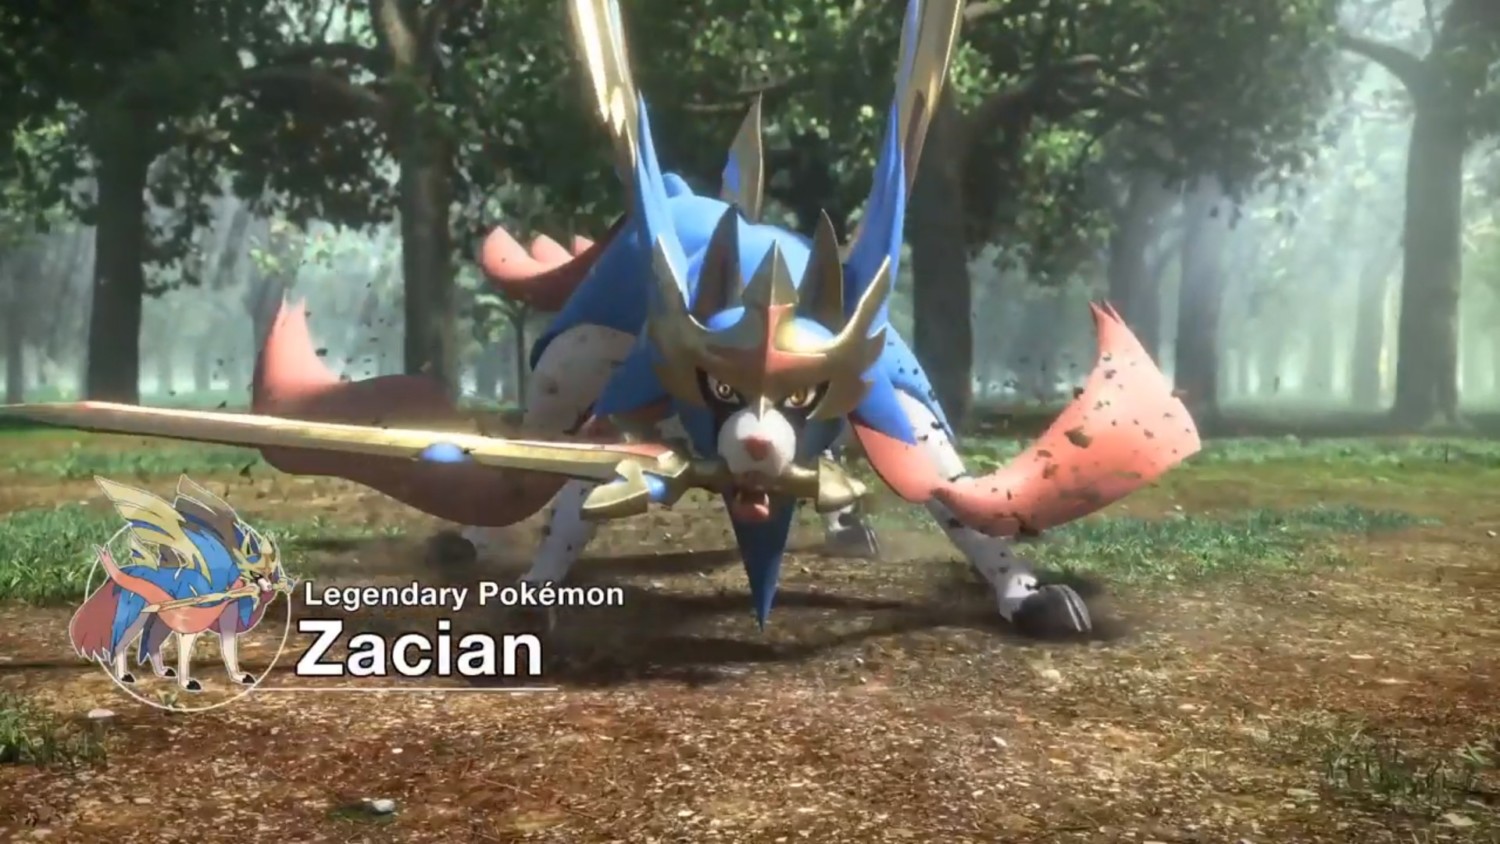 Pokemon Sword and Shield Legendaries are Zacian and Zamazenta